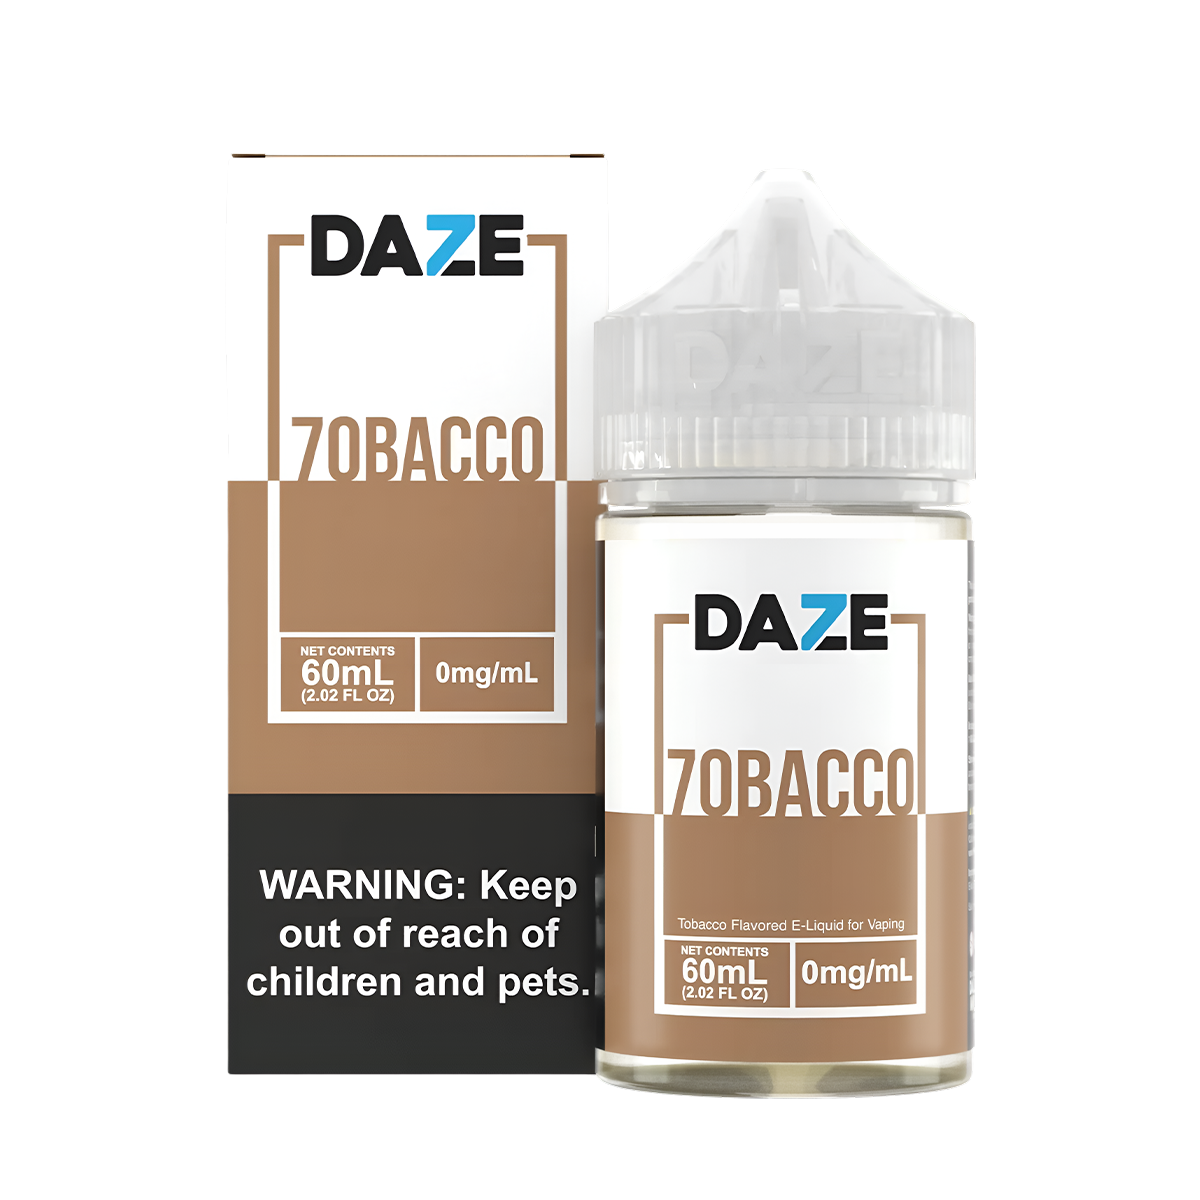 7 Daze 7obacco & Glacial Mint FreeBase Vape Juice 0 Mg 60 Ml Tobacco